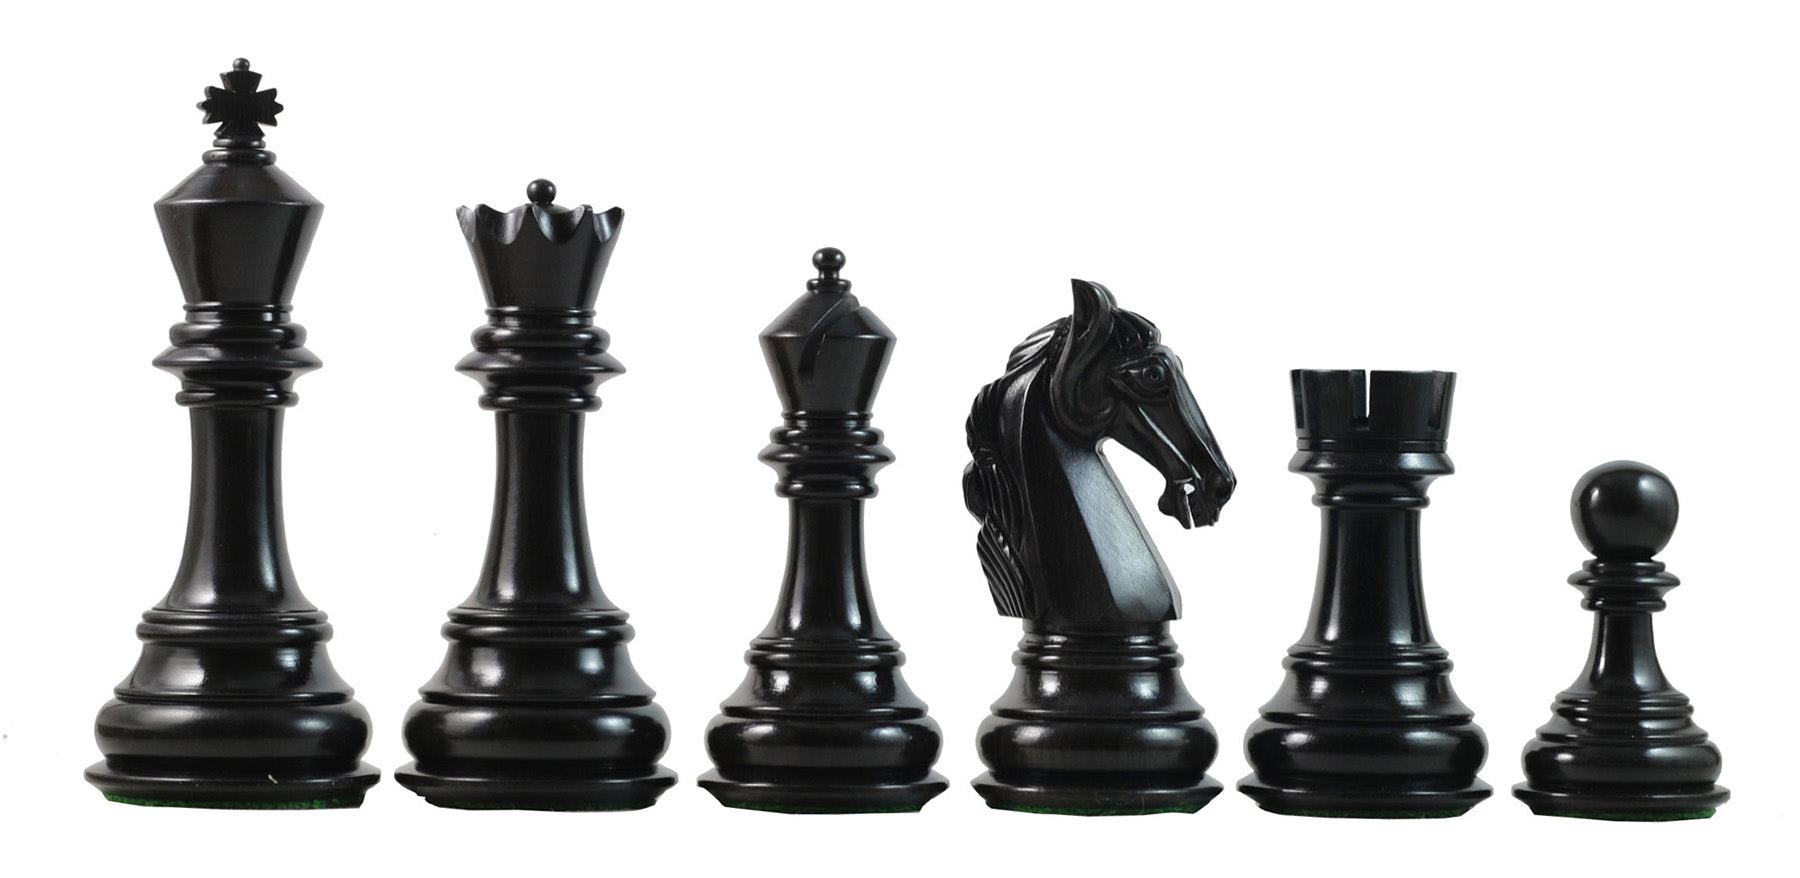 Columbian Series 4.5" Premium Staunton Chess Set in Ebony and Box Wood